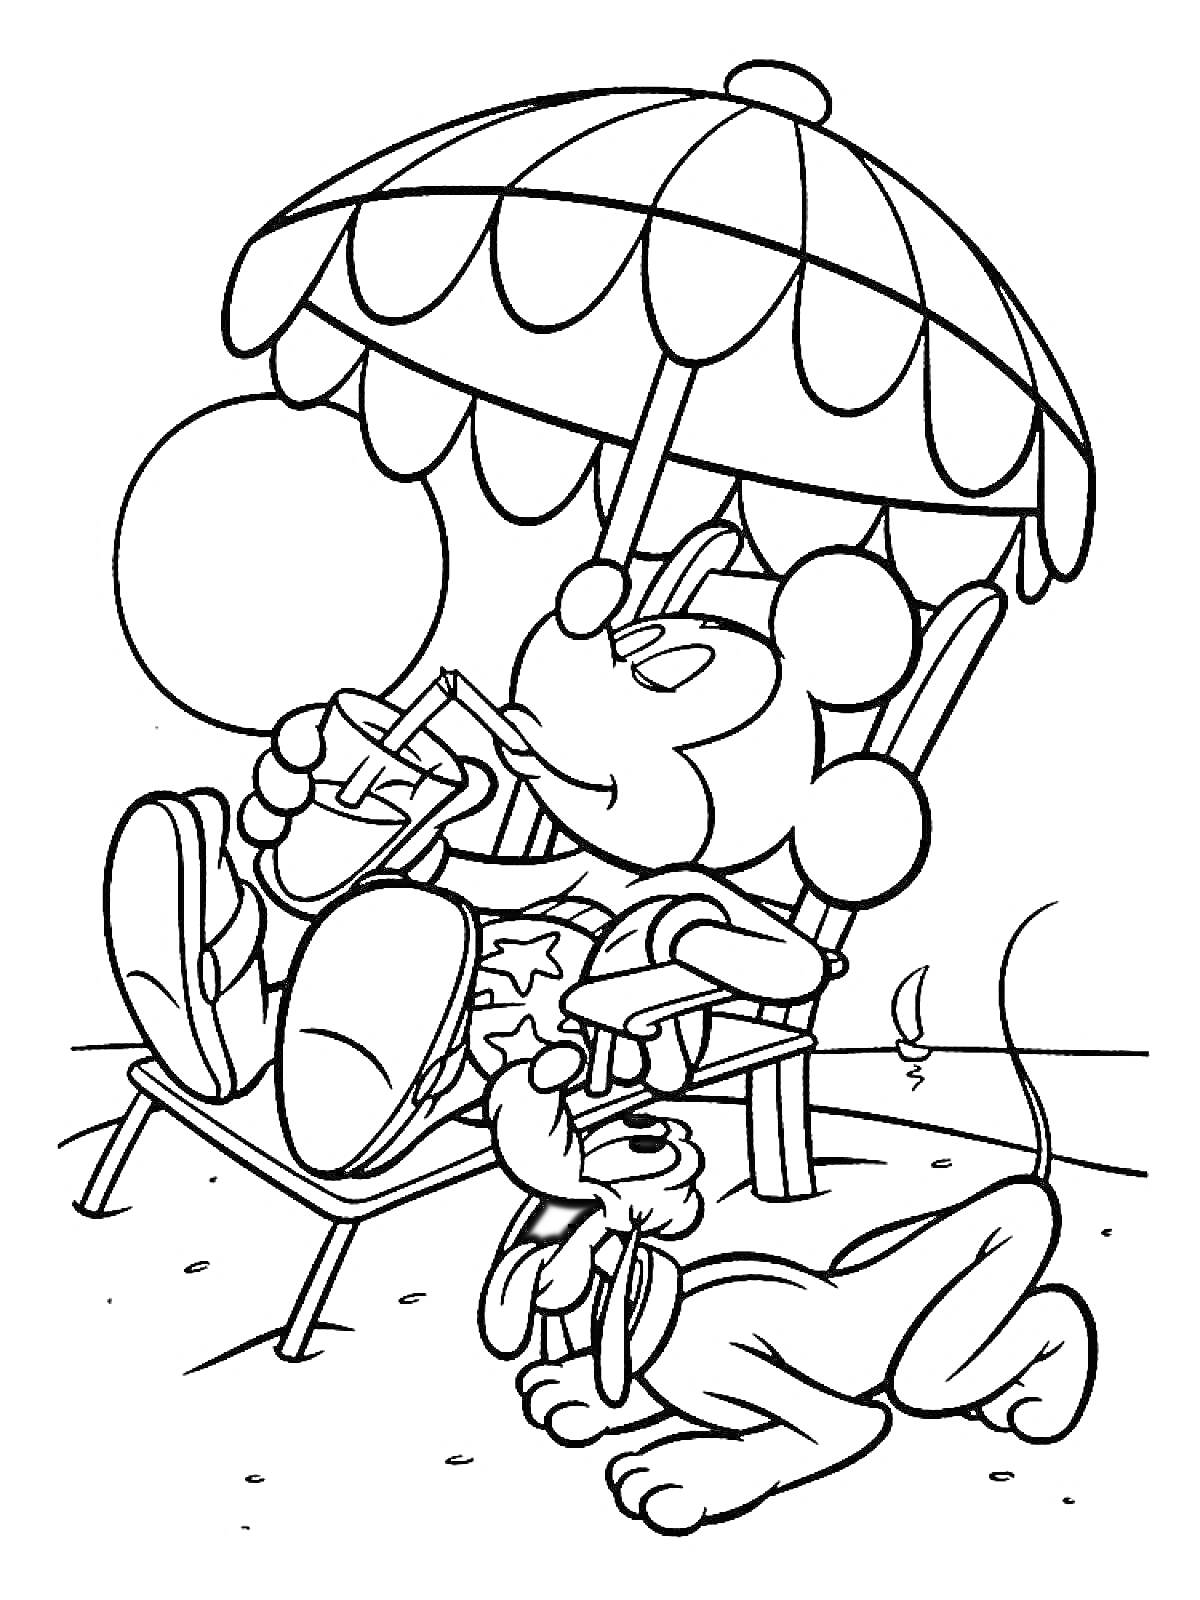 Микки Маус отдыхает на пляже, сидя на шезлонге под зонтом, с напитком в руке, рядом его собака Плуто